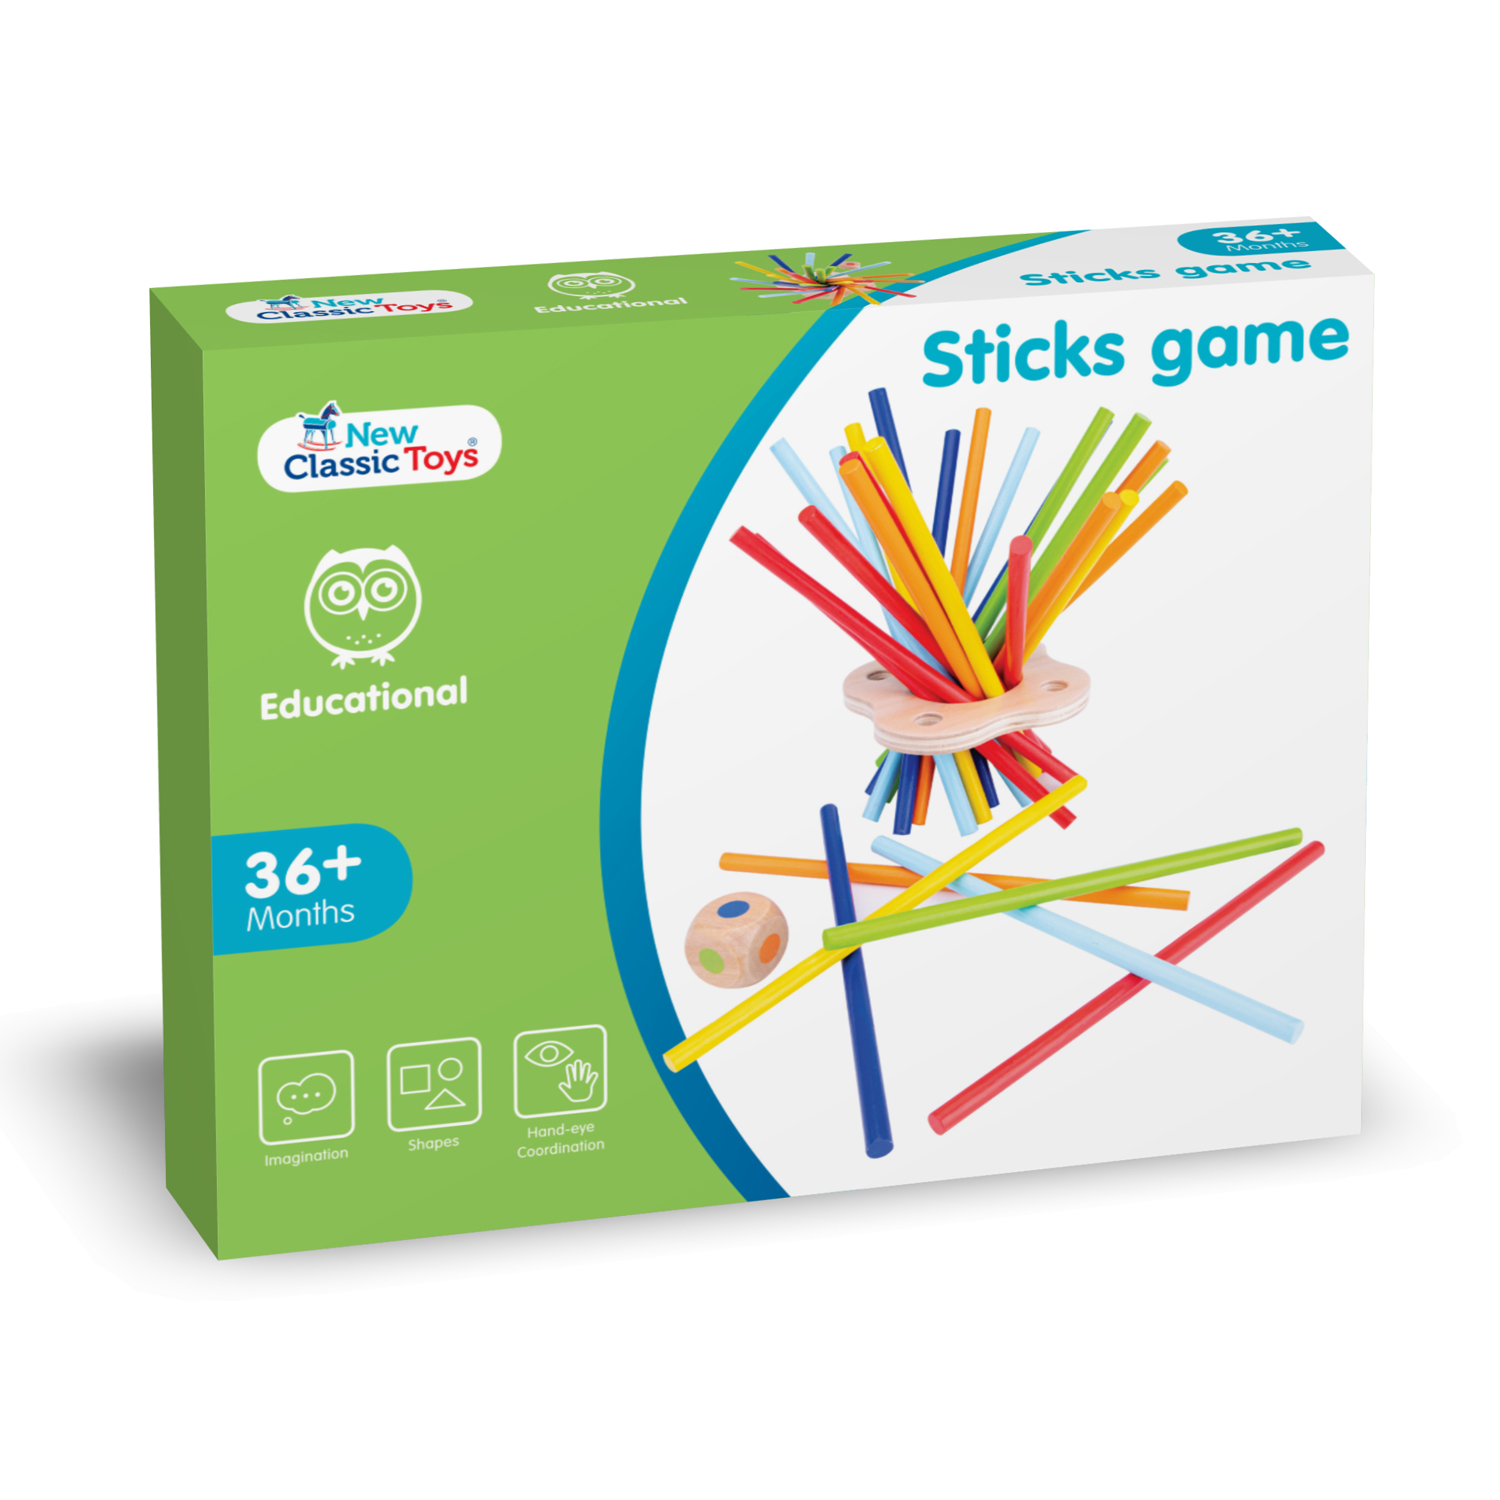 Sticks game  New Classic Toys